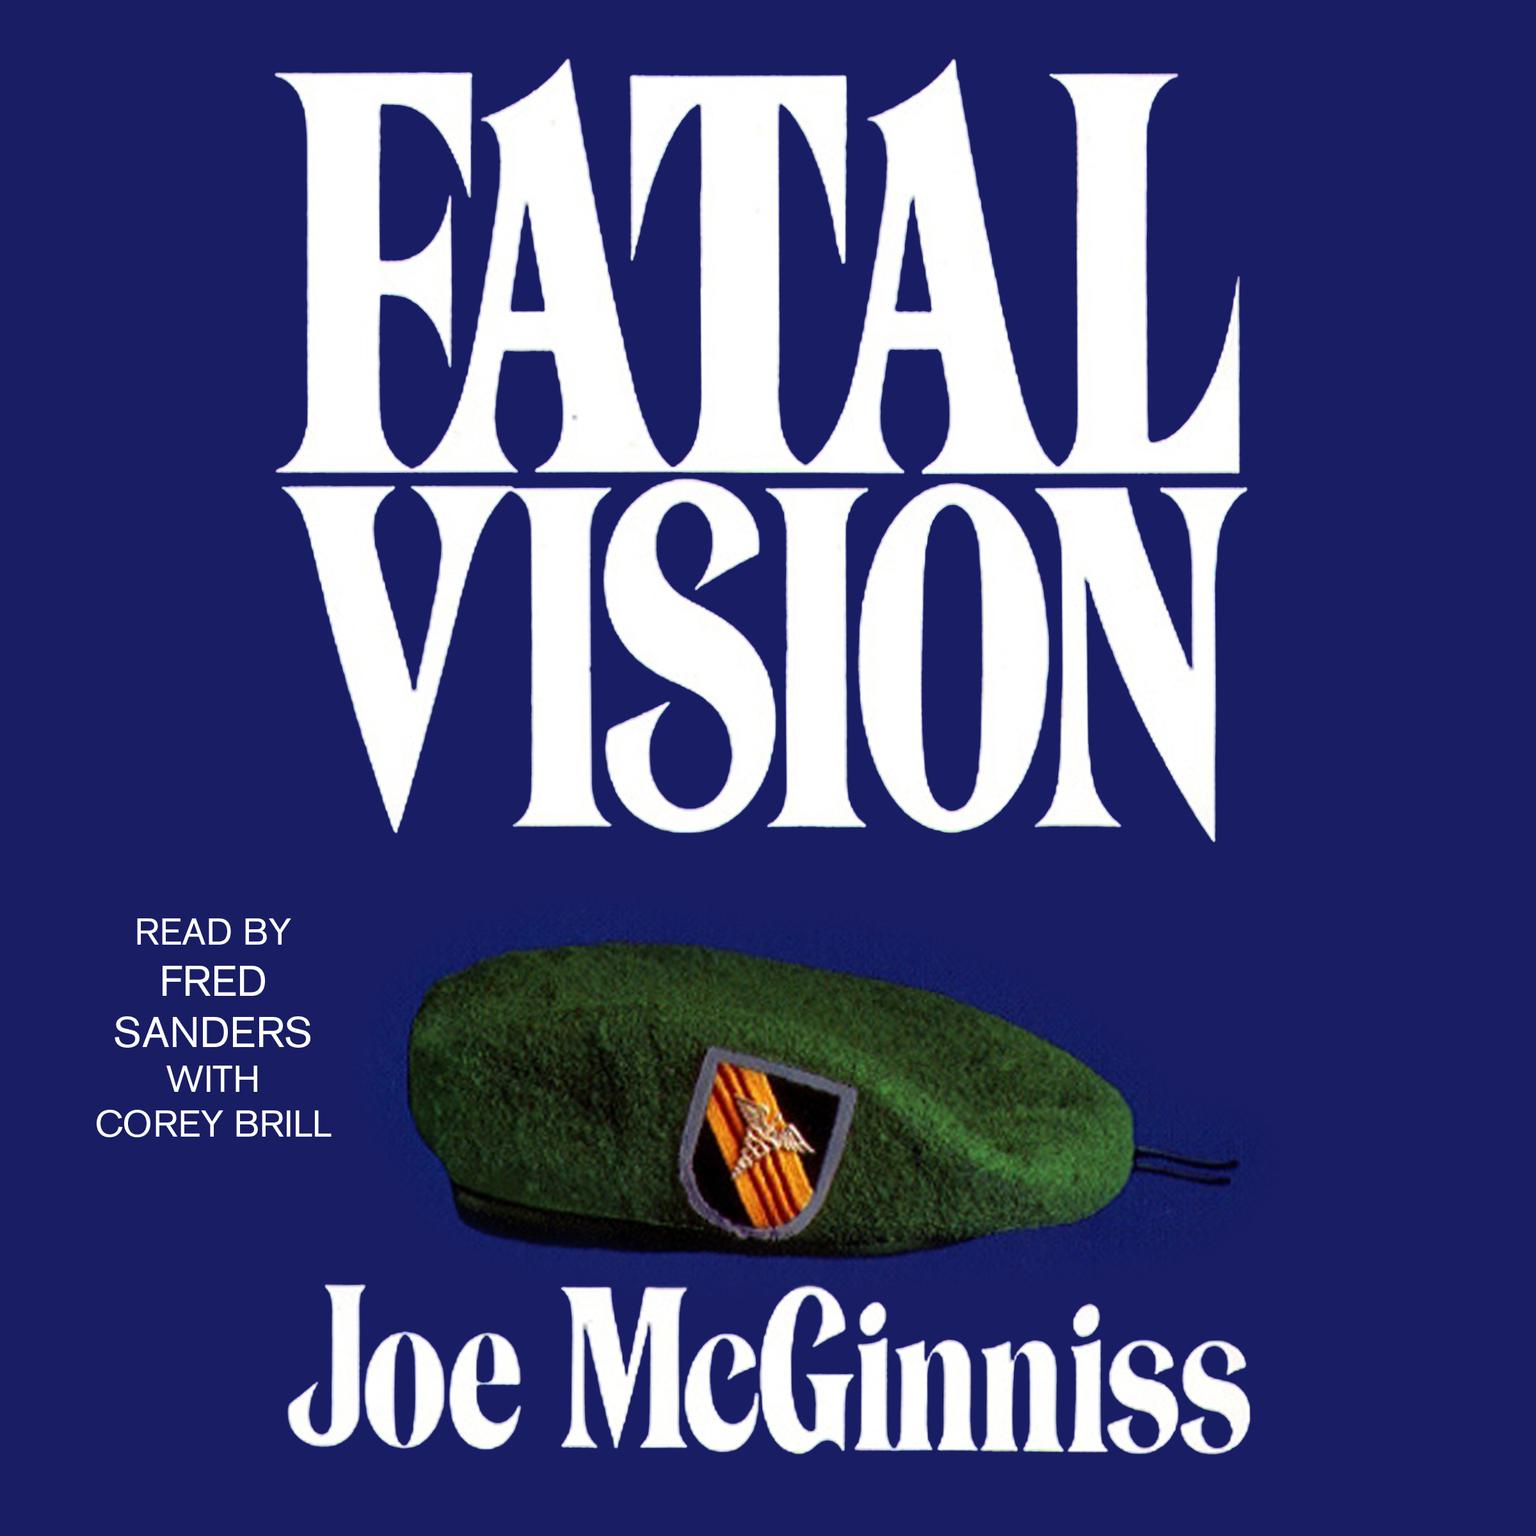 Fatal Vision: A True Crime Classic Audiobook, by Joe McGinniss